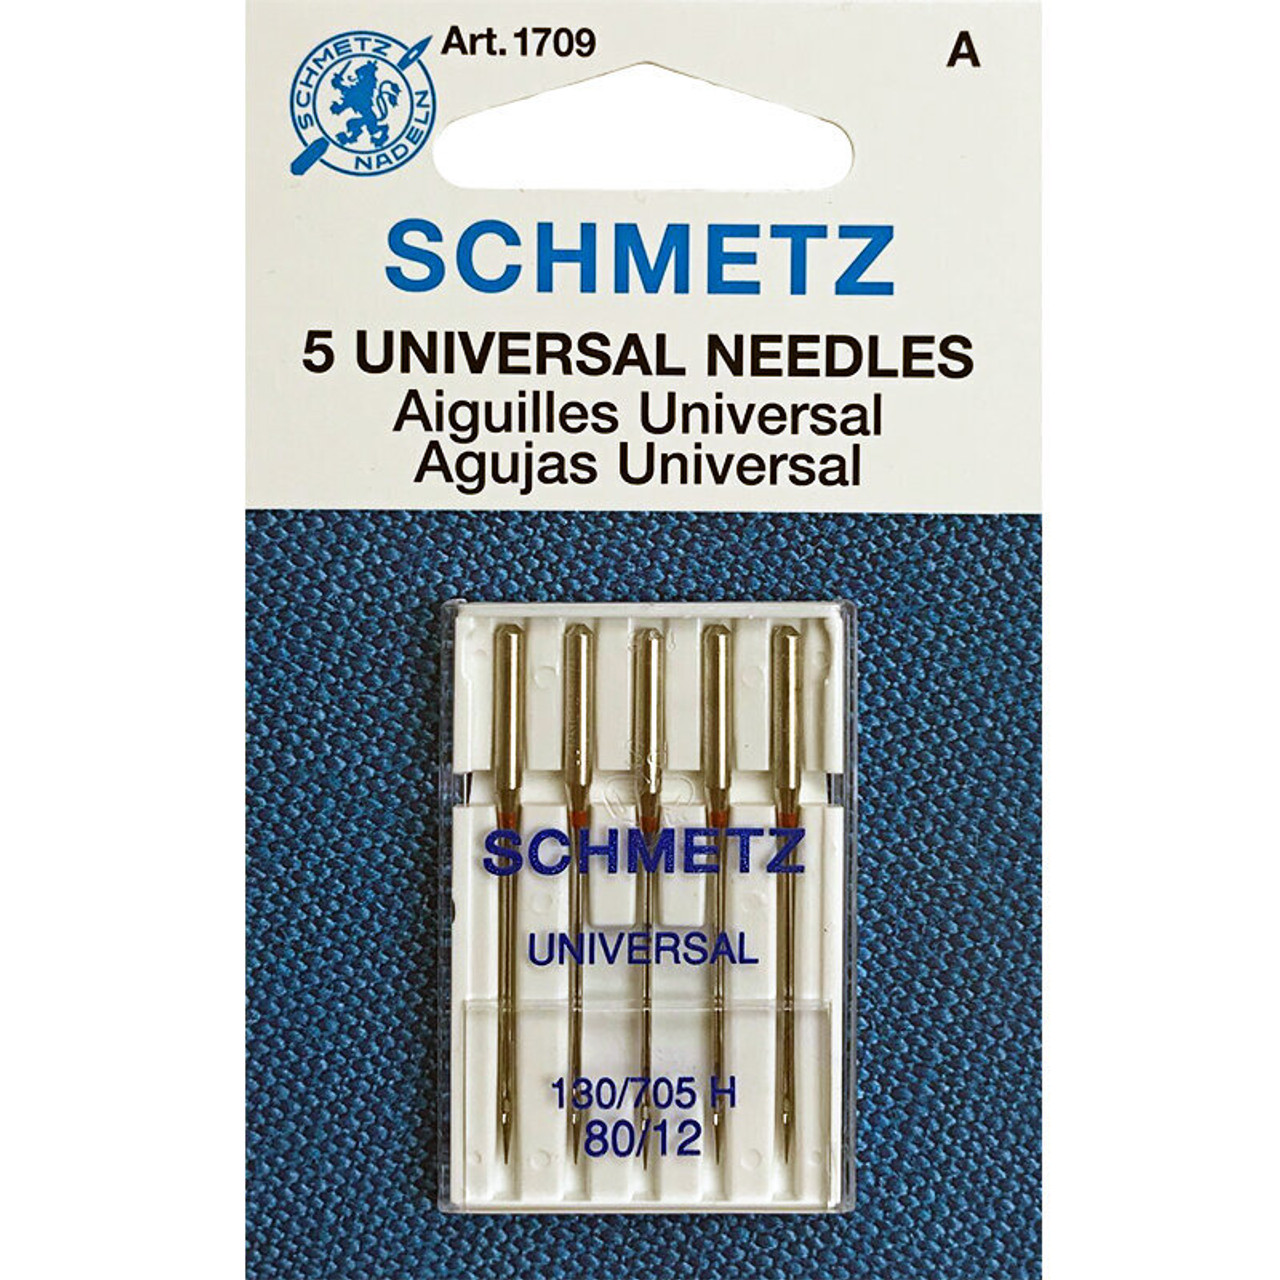 Schmetz Universal Sewing Machine Needles, Size 80/12